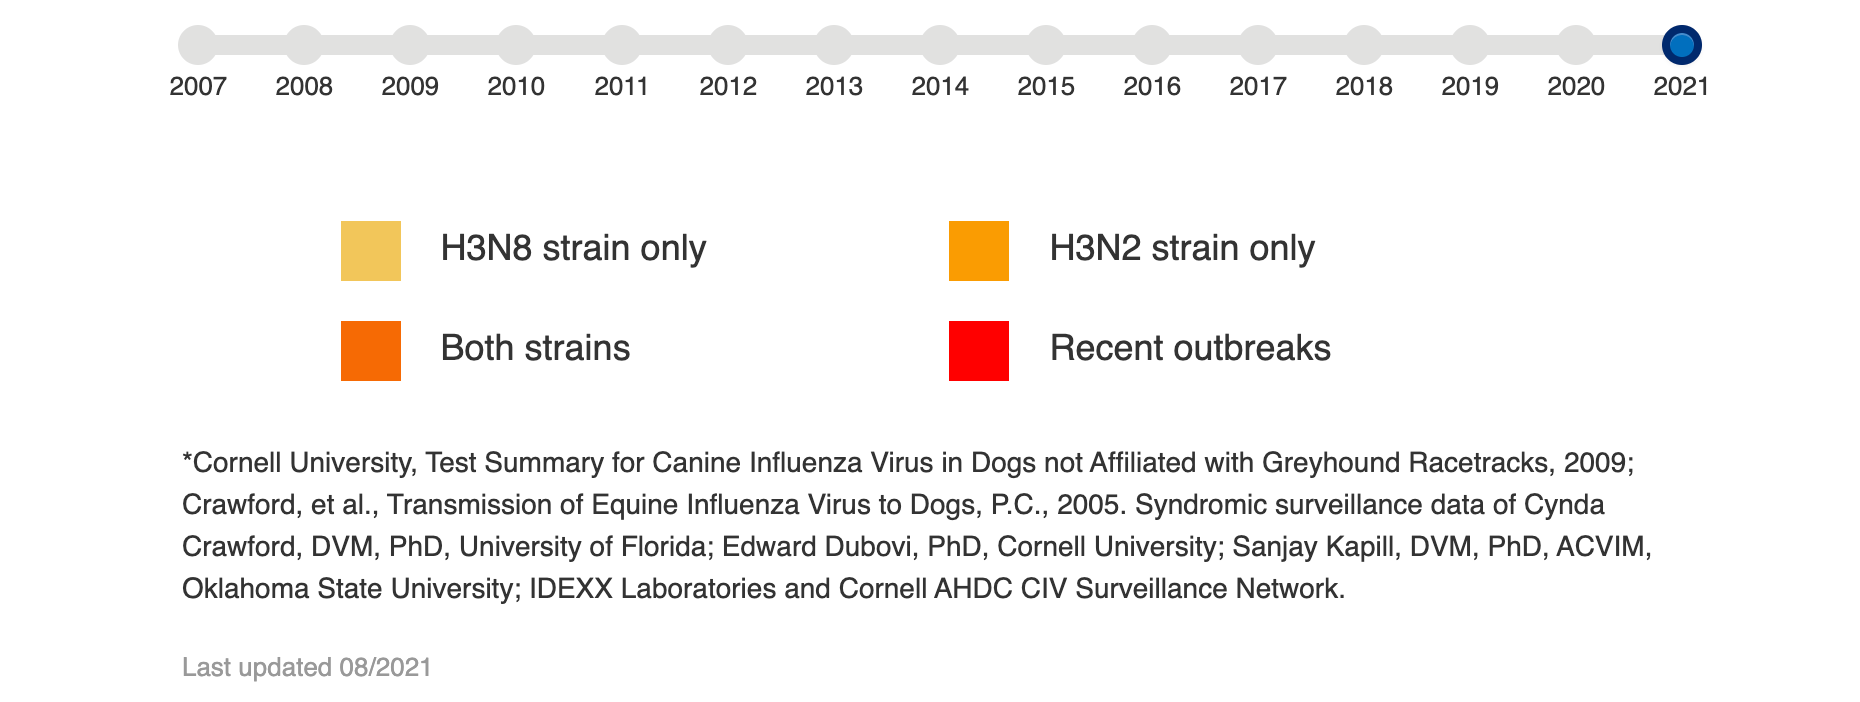 dog flu state image guide